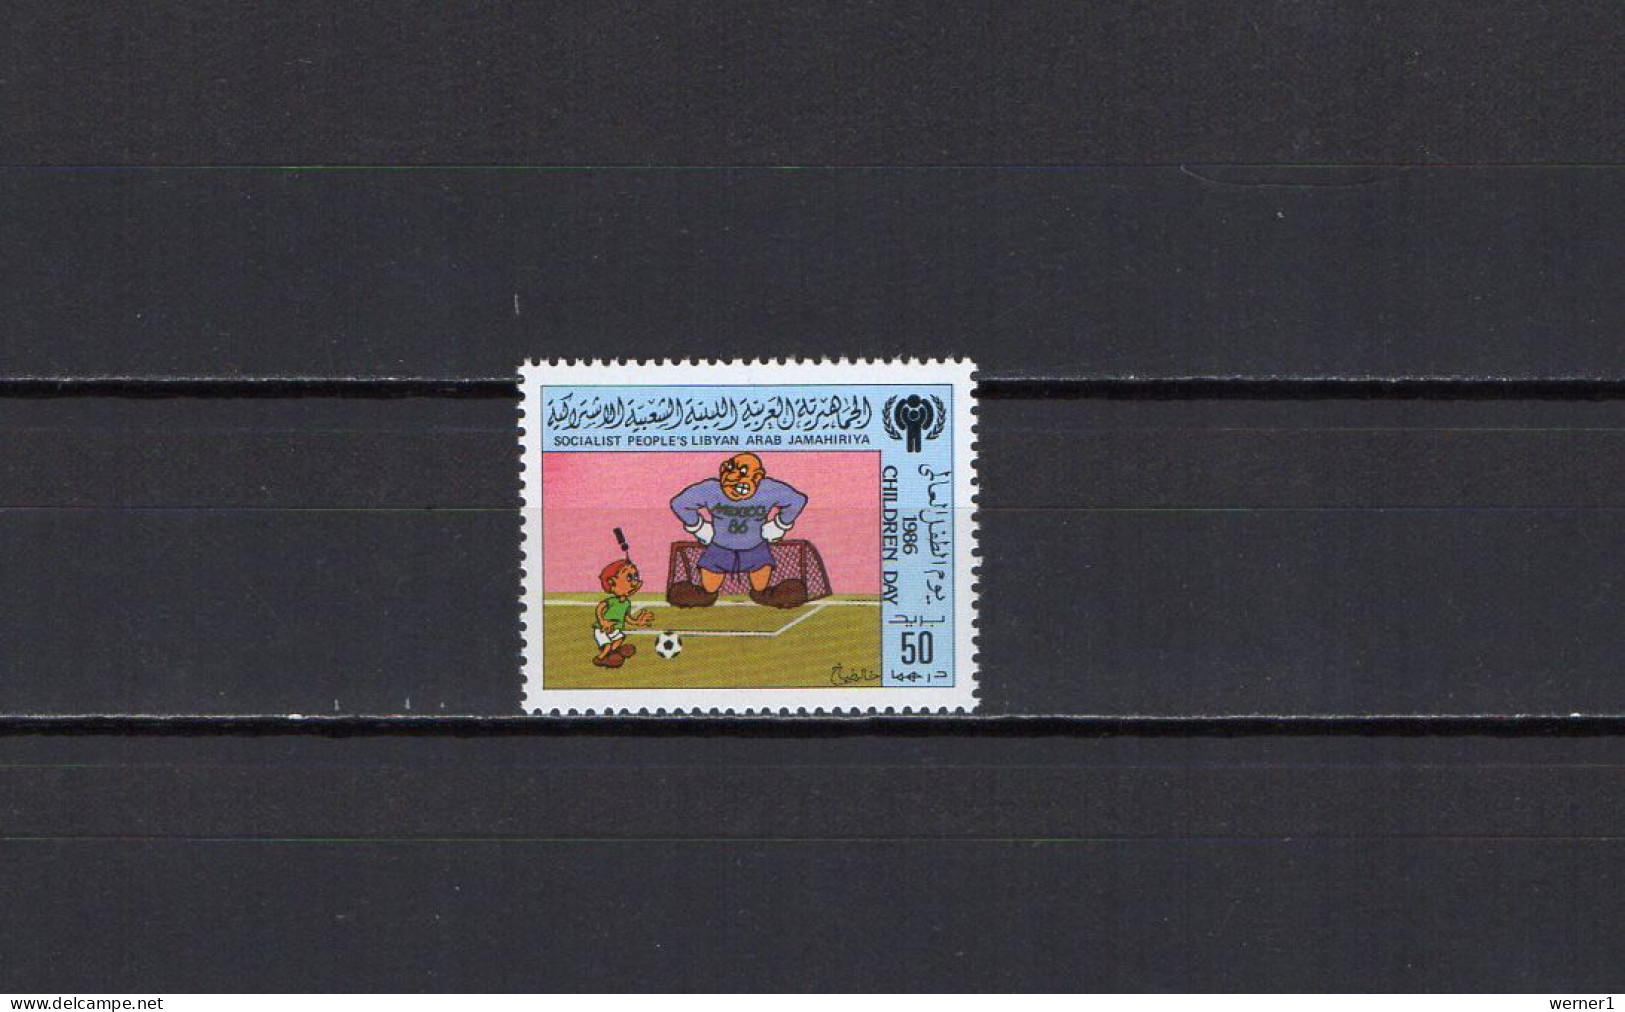 Libya 1986 Football Soccer Stamp MNH - Ongebruikt